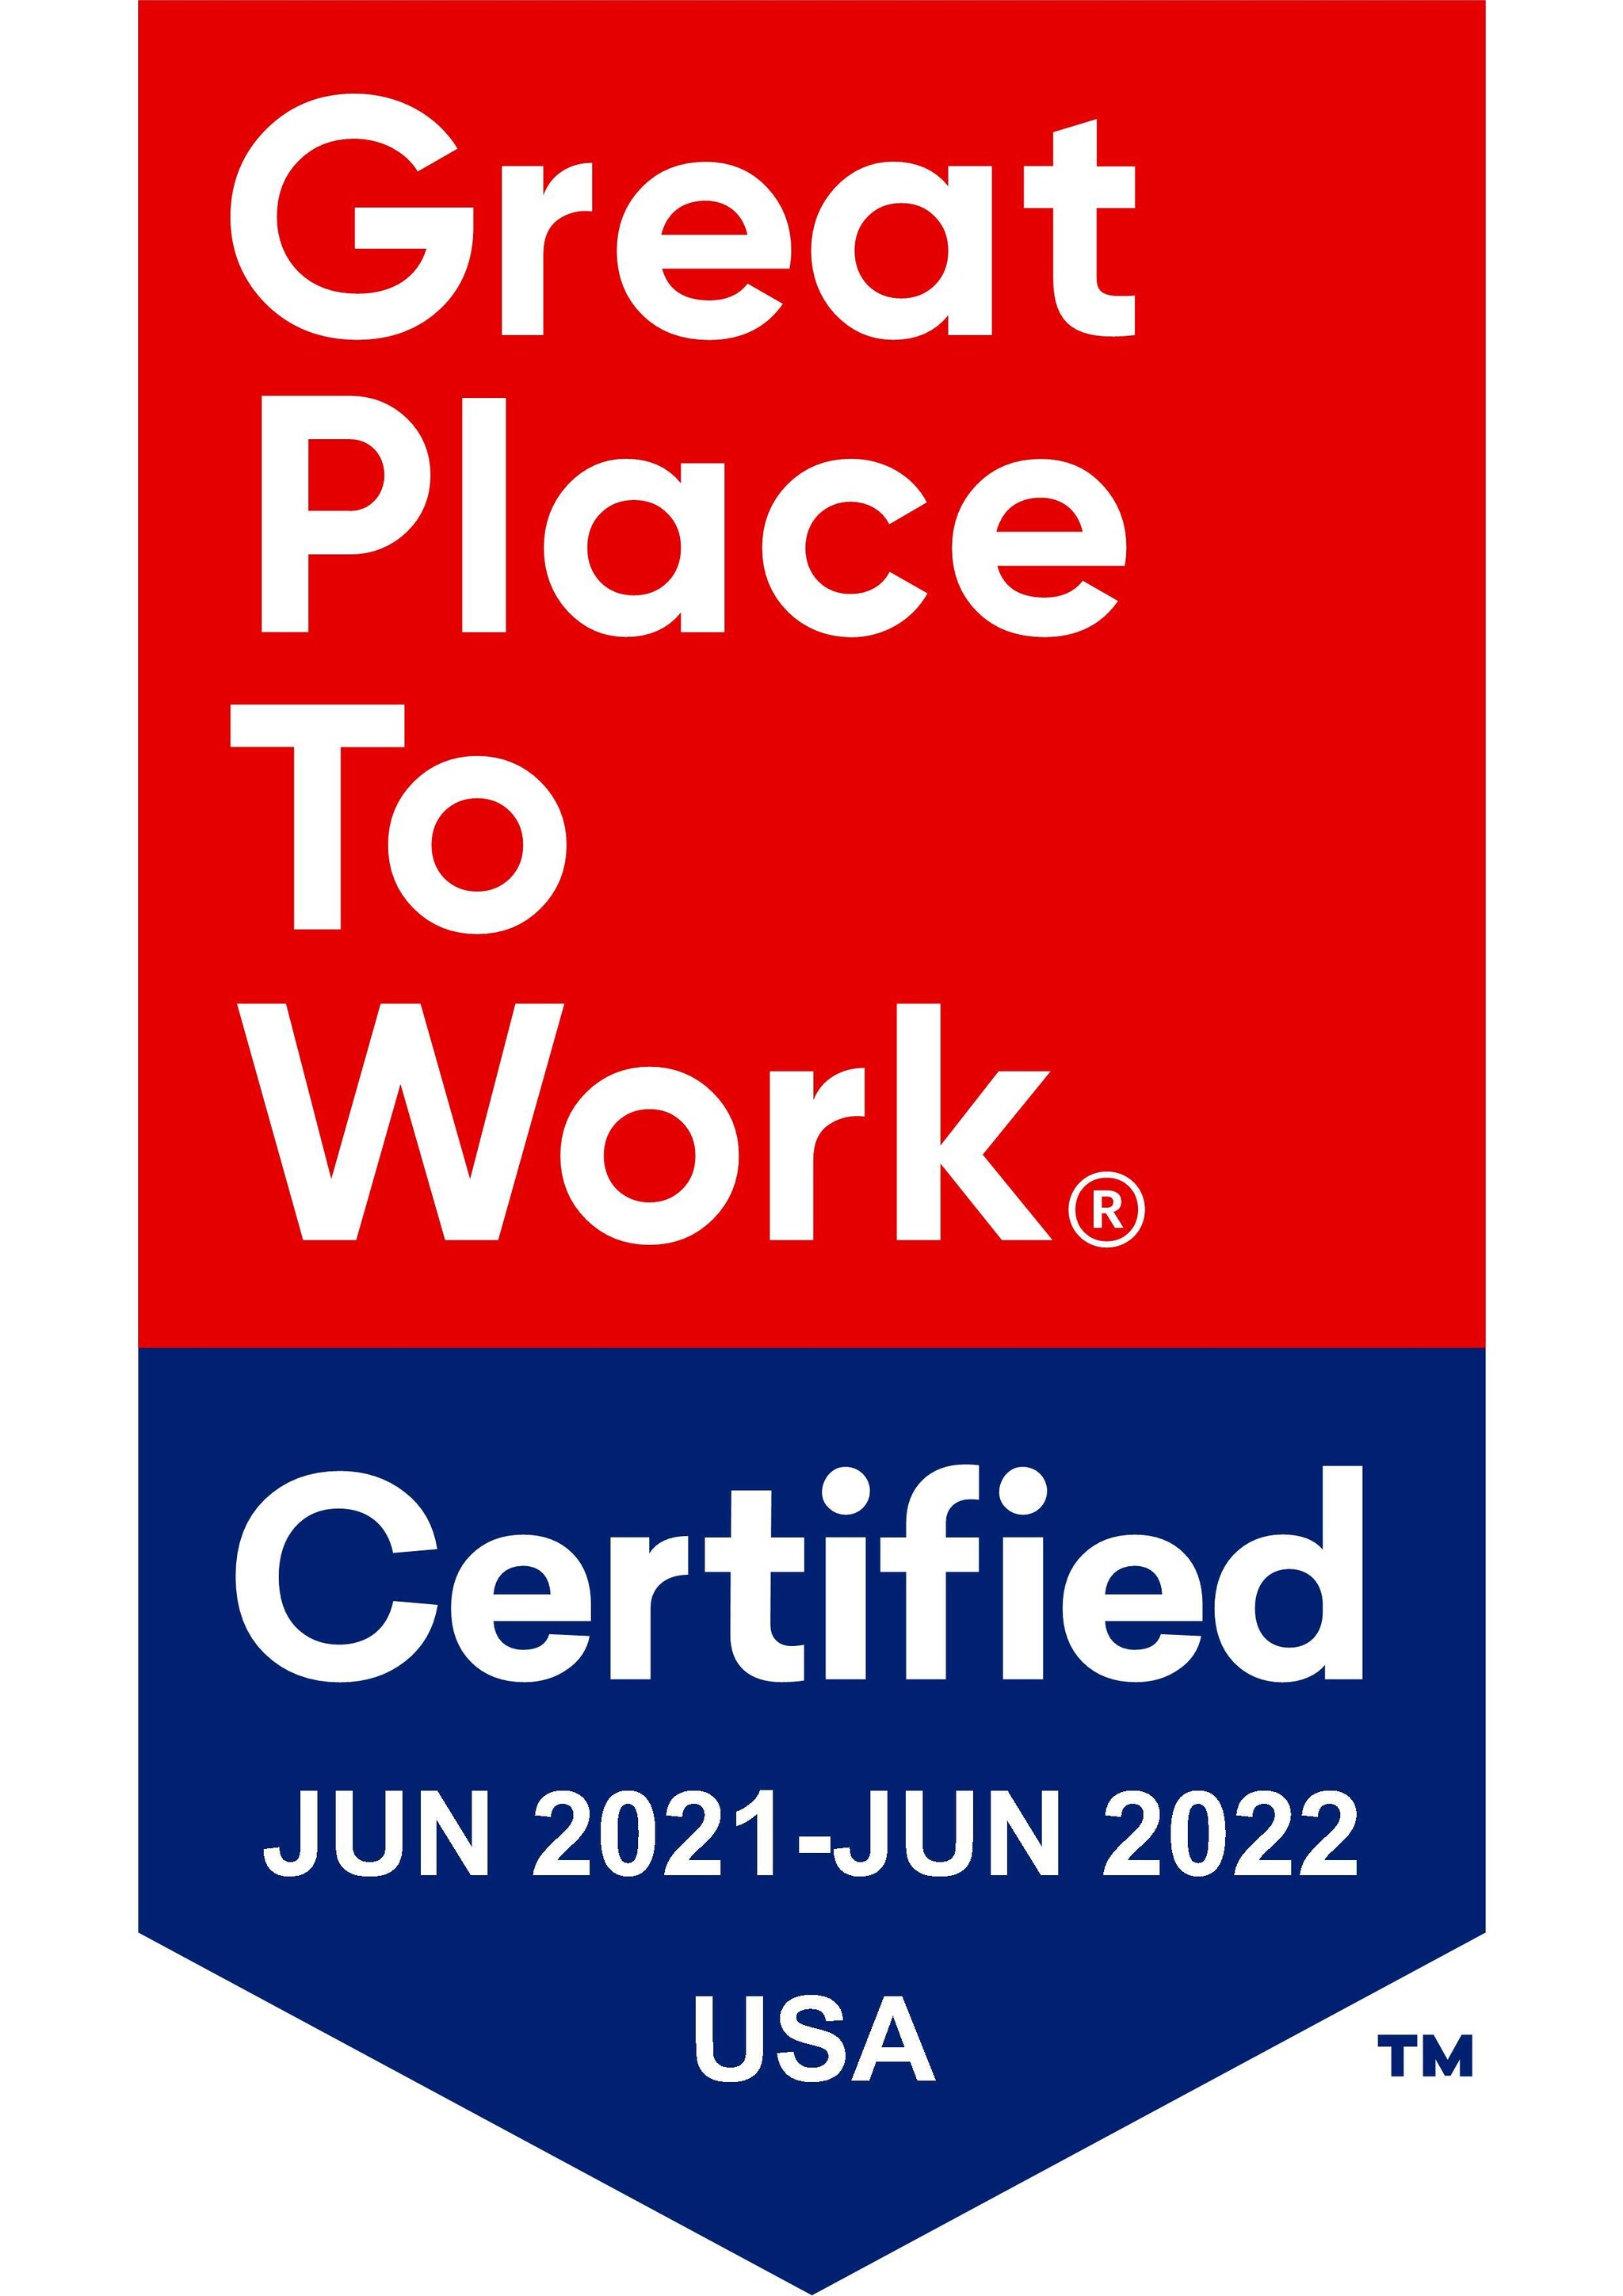 certification-badge